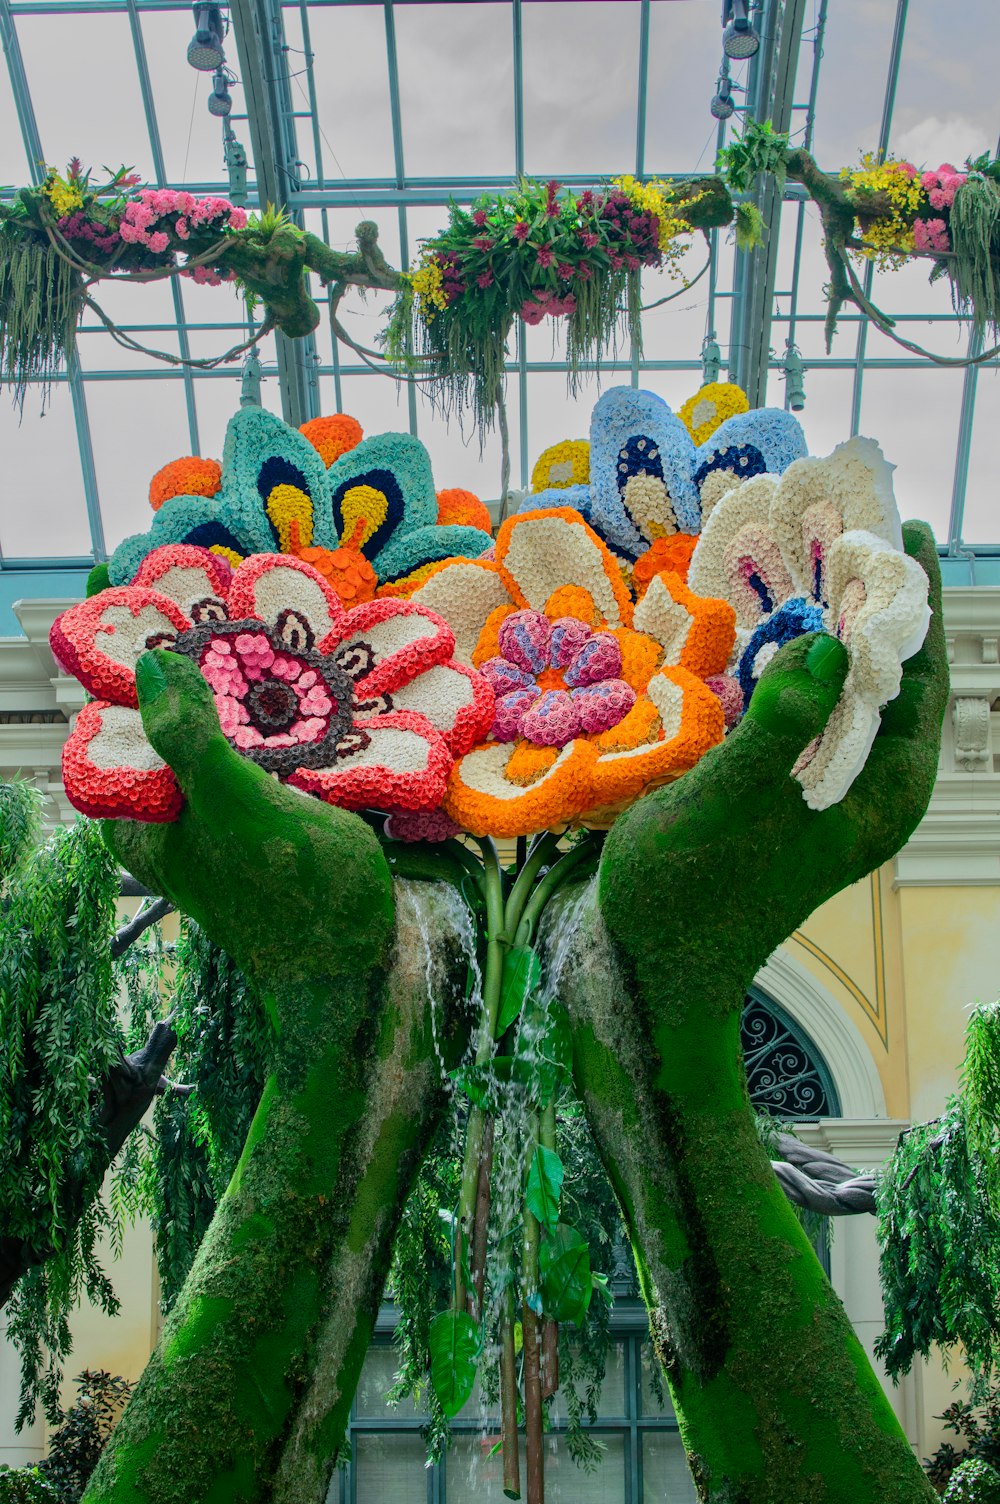 a sculpture of hands holding a bouquet of flowers